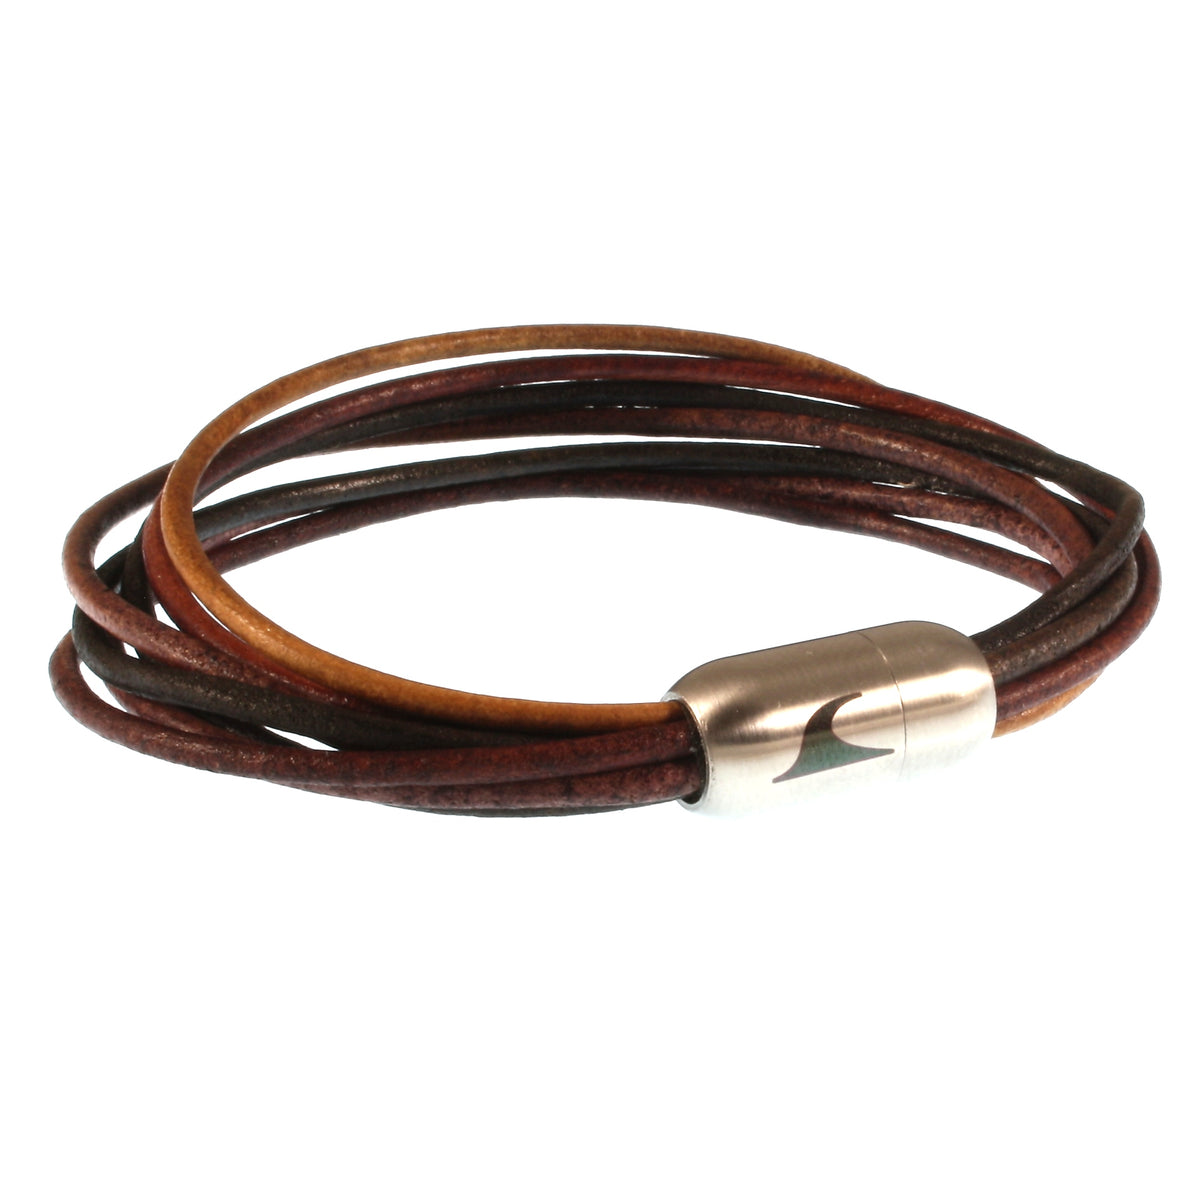 Damen-Leder-armband-fem-wood-silber-Edelstahlverschluss-vorn-wavepirate-shop-r